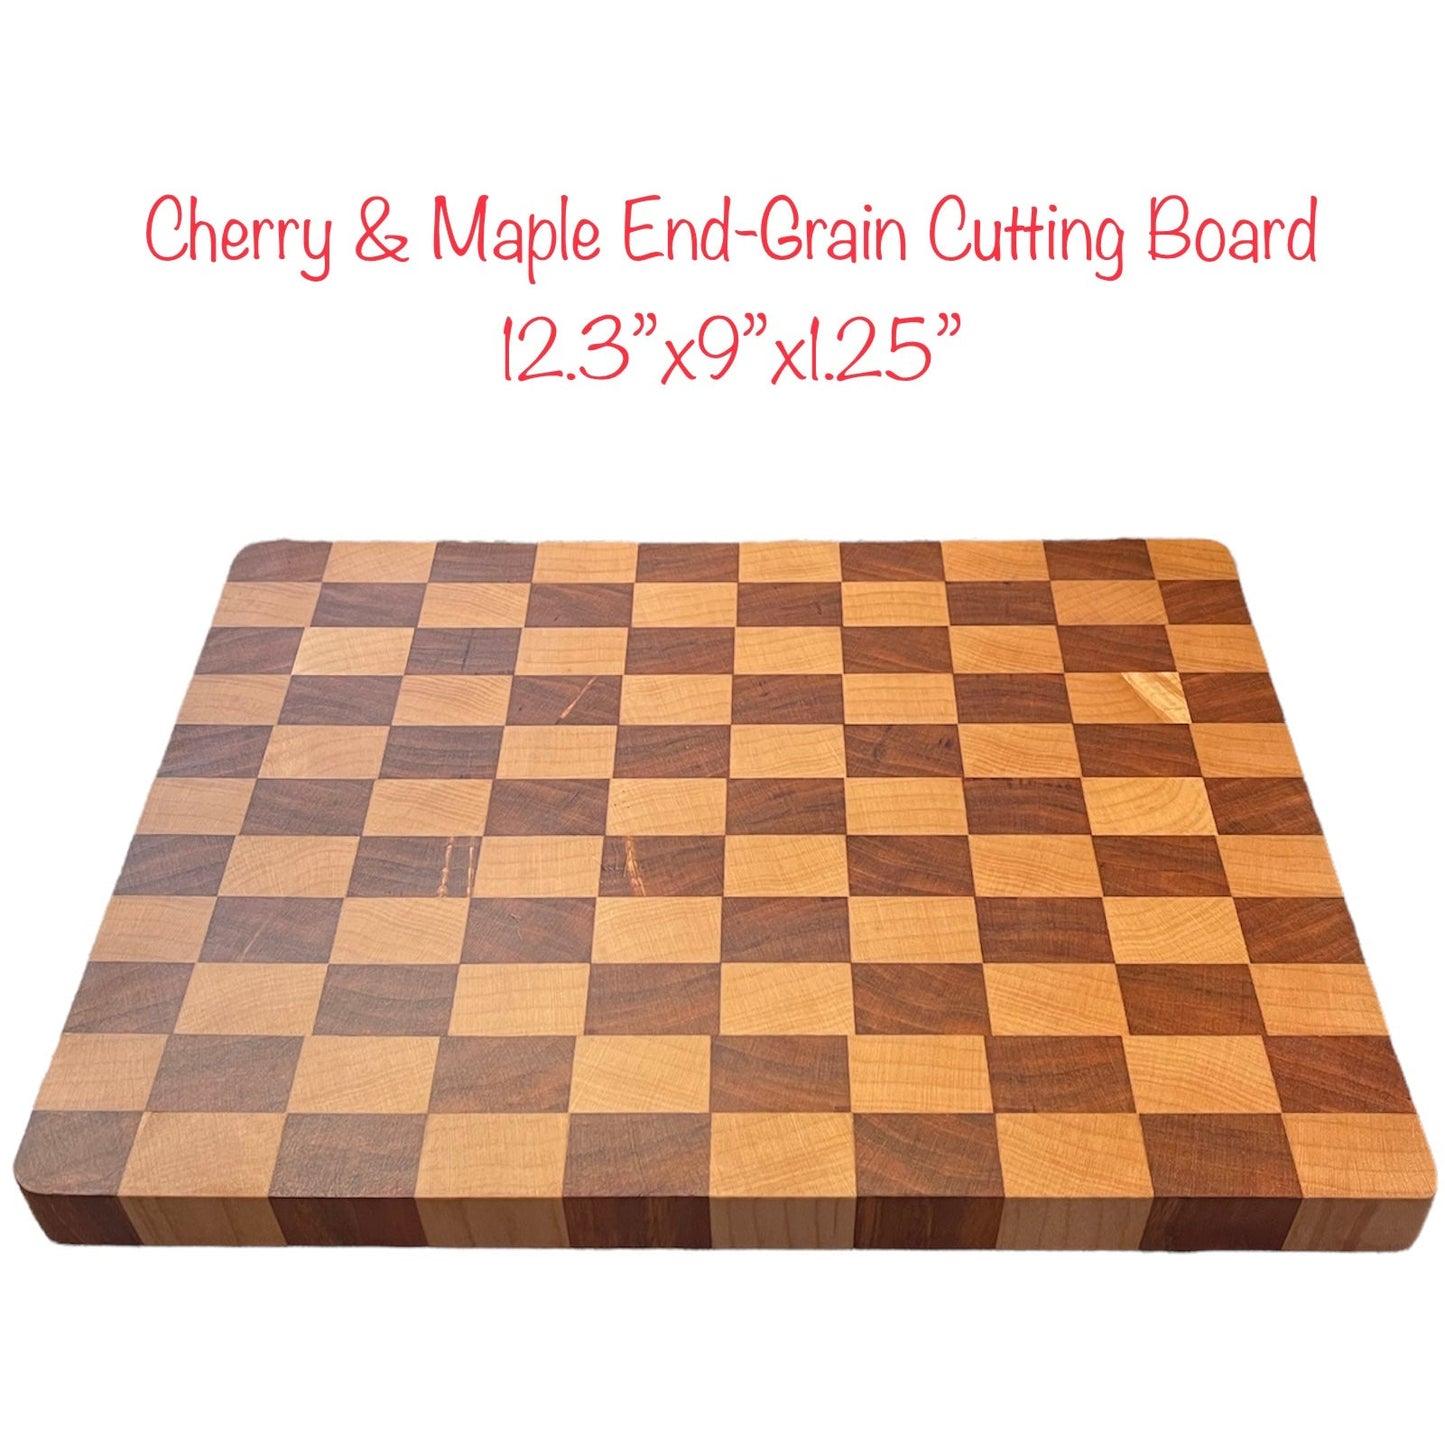 Cherry & Maple End-Grain Cutting Board - Cross Cut Creations